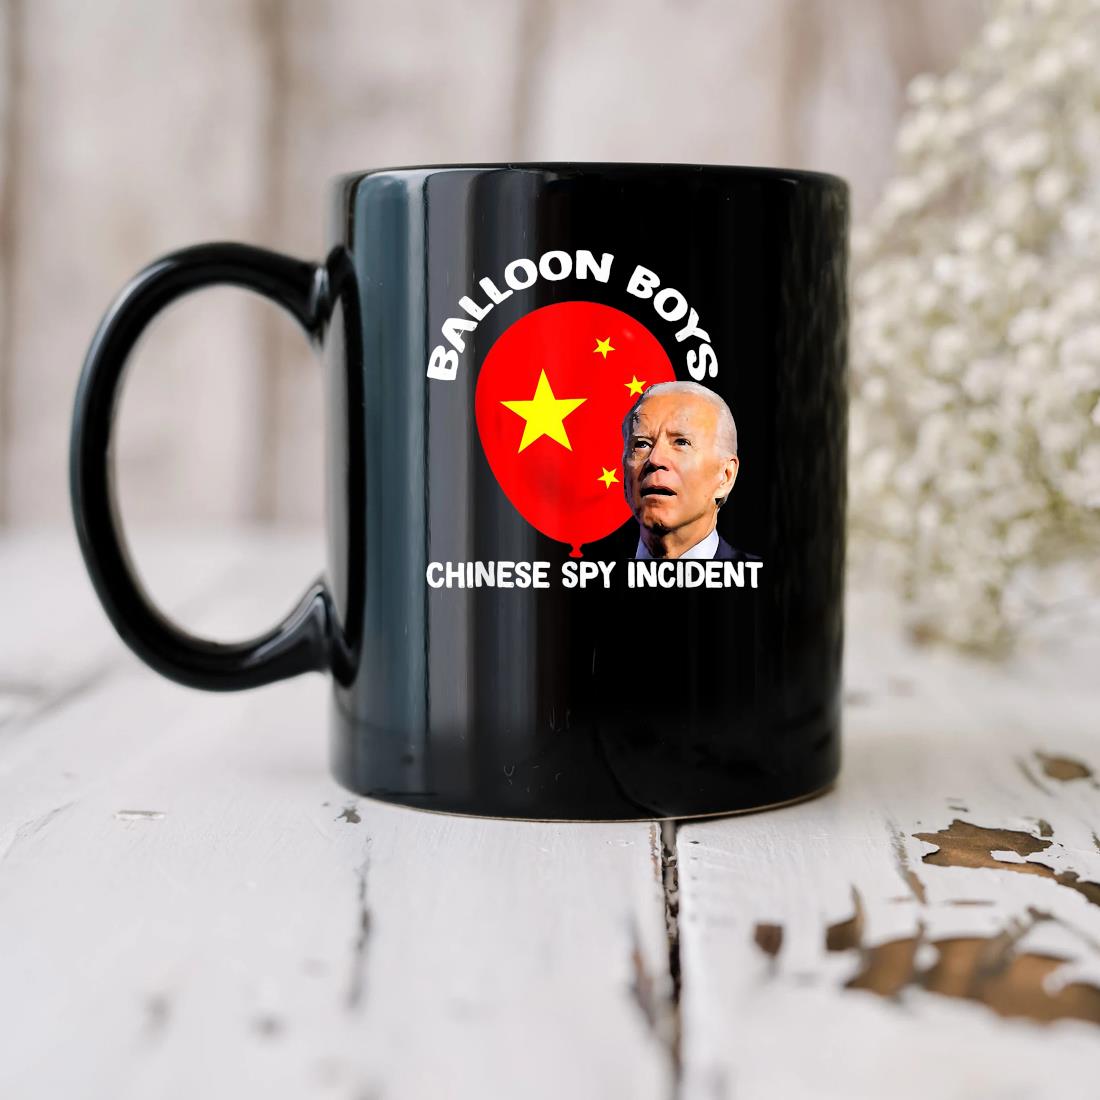 Balloon Boys Joe Biden Vs Xi Jinping Mug